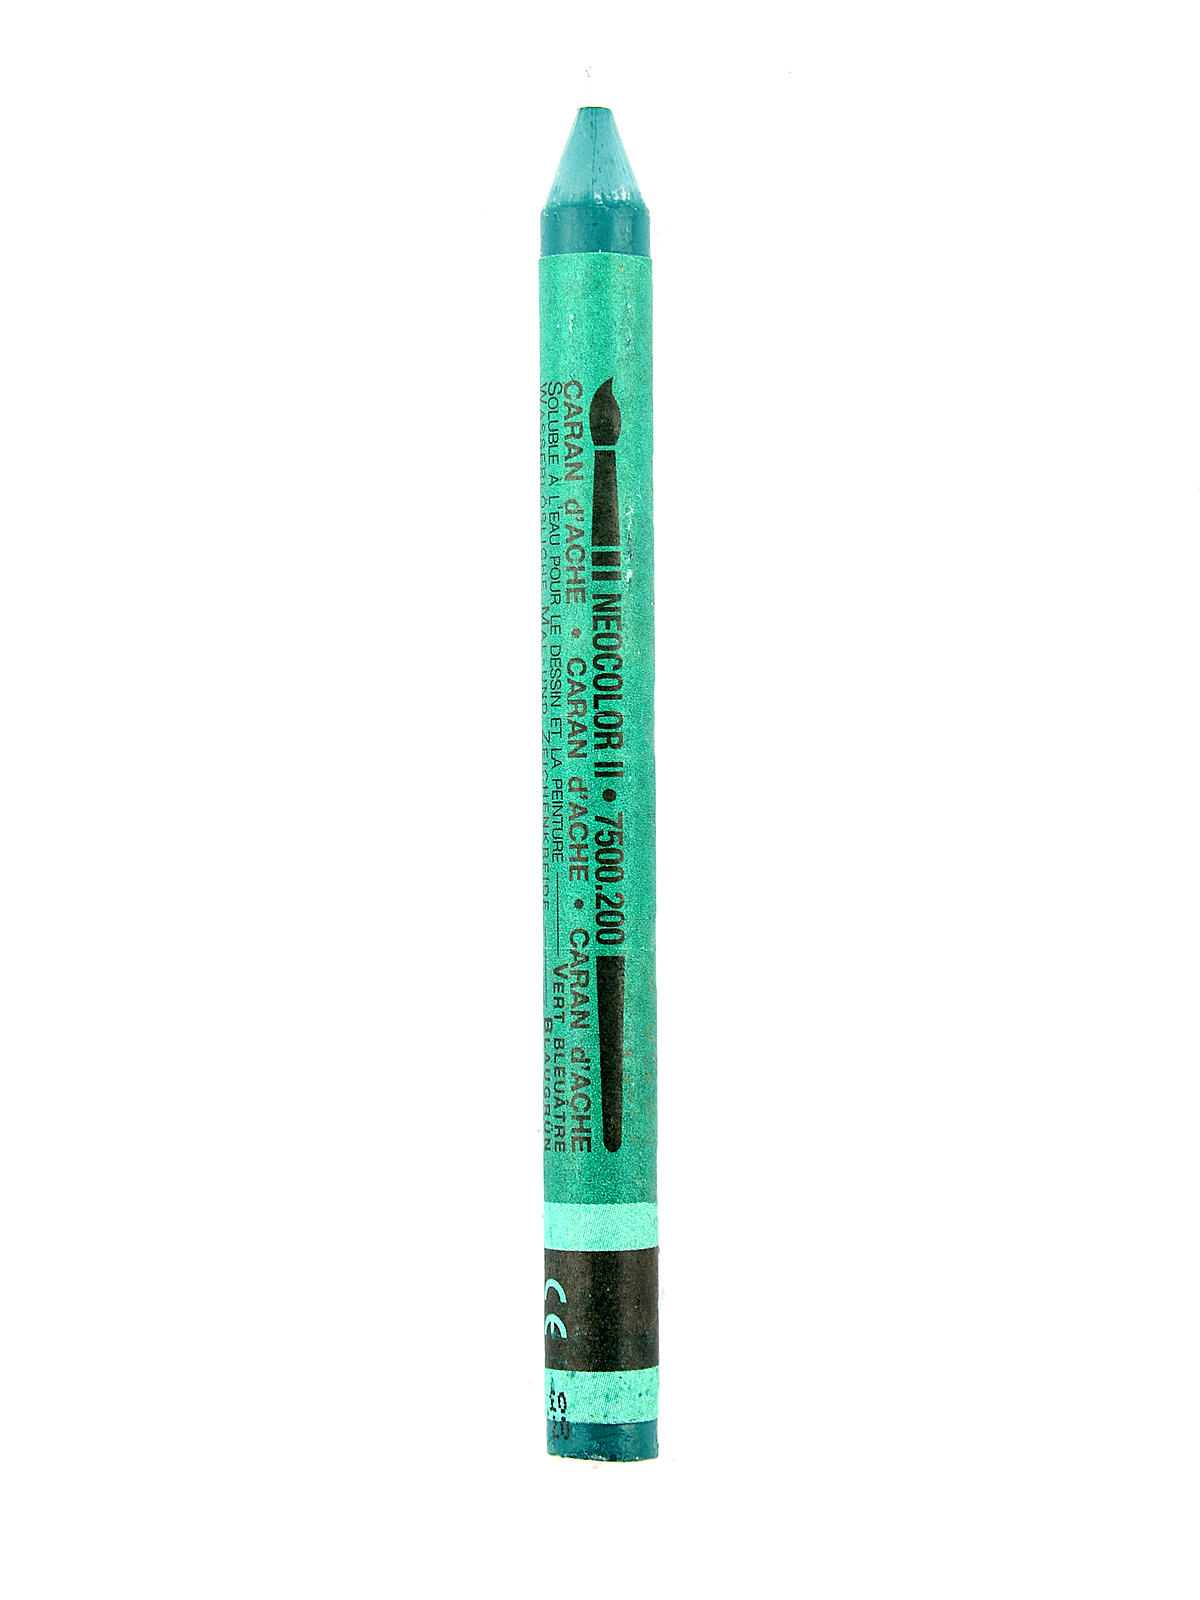 Neocolor Ii Aquarelle Water Soluble Wax Pastels Bluish Green